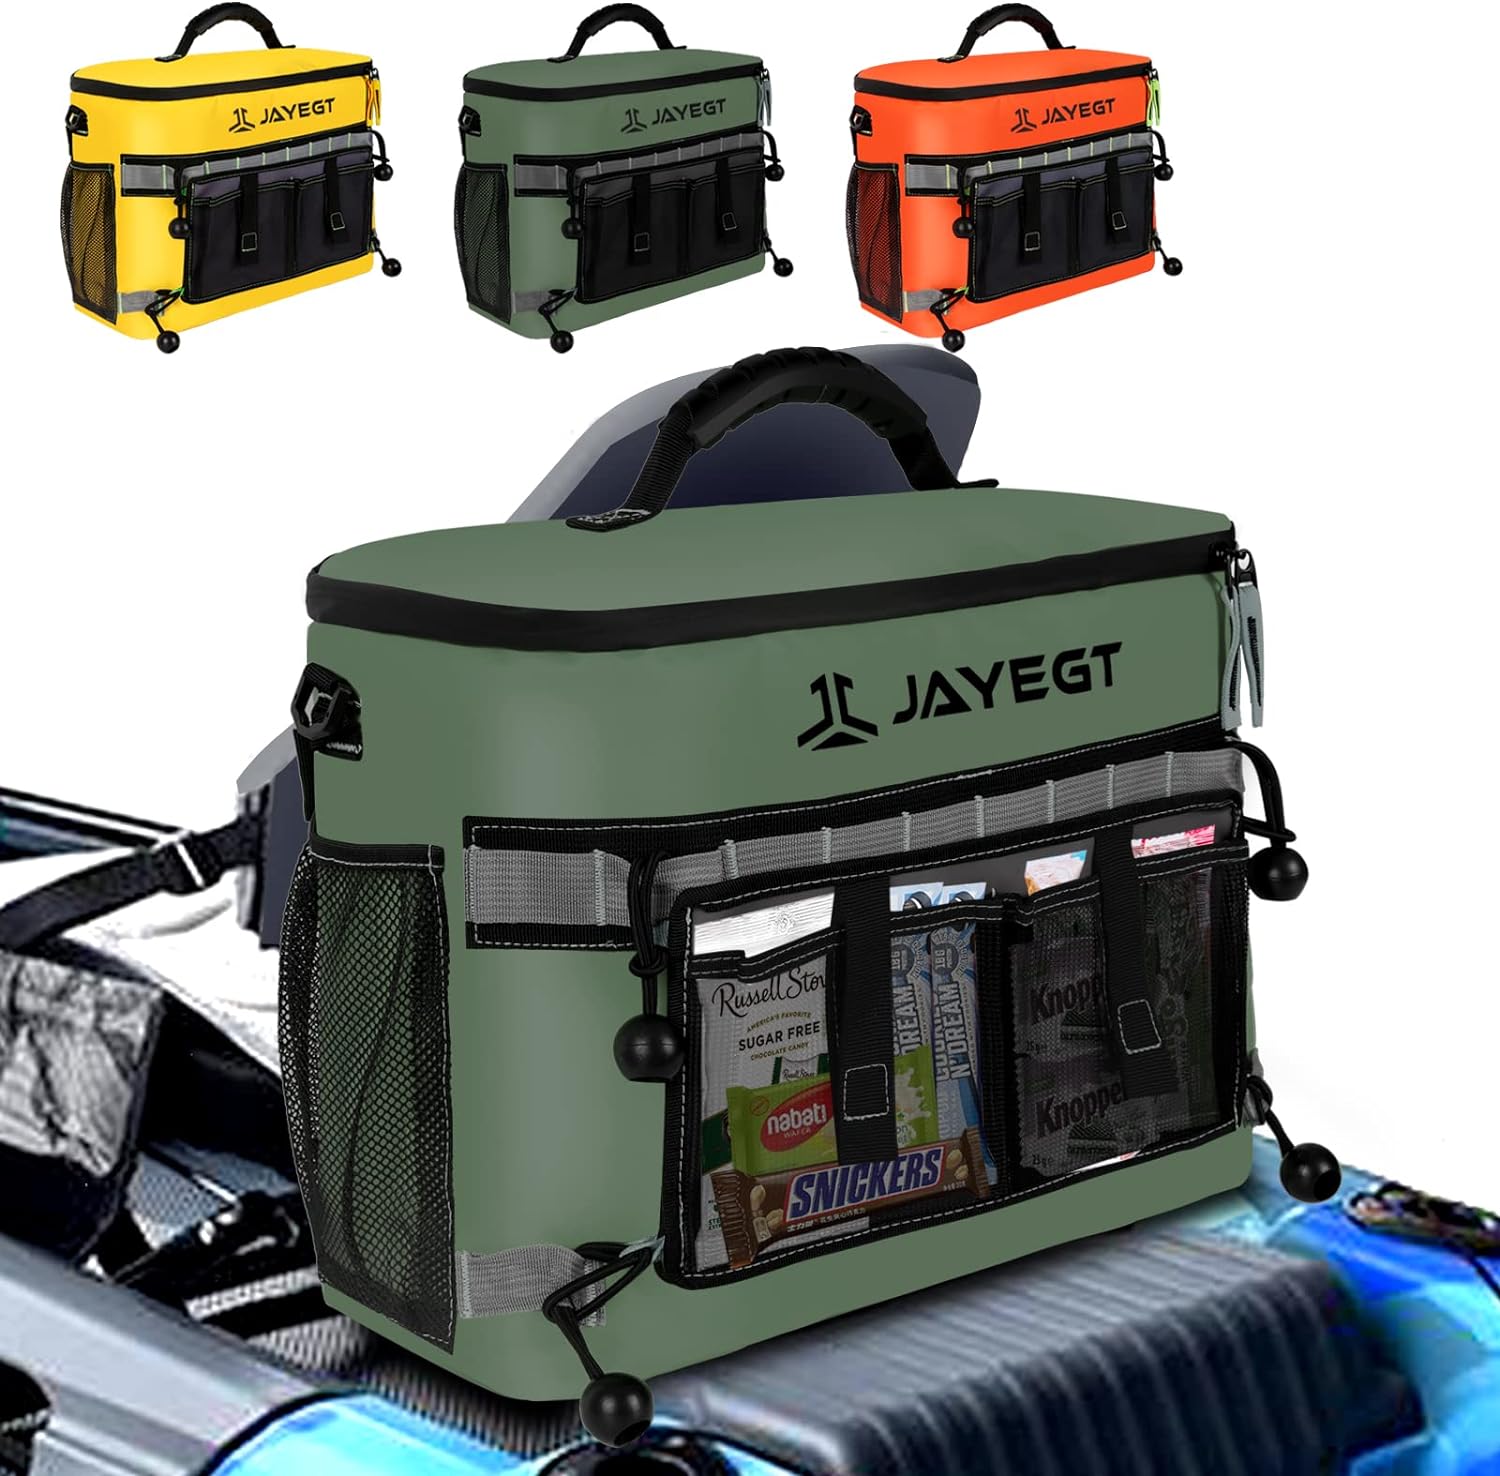 JAYEGT Kayak Cooler Behind Seat,Waterproof Seat Back Cooler for Kayaks fit with Lawn-Chair Style Seats,Kayak Accessories Kayak Cooler Bag, Perfect for Kayaking, Beach, Fishing, picnics